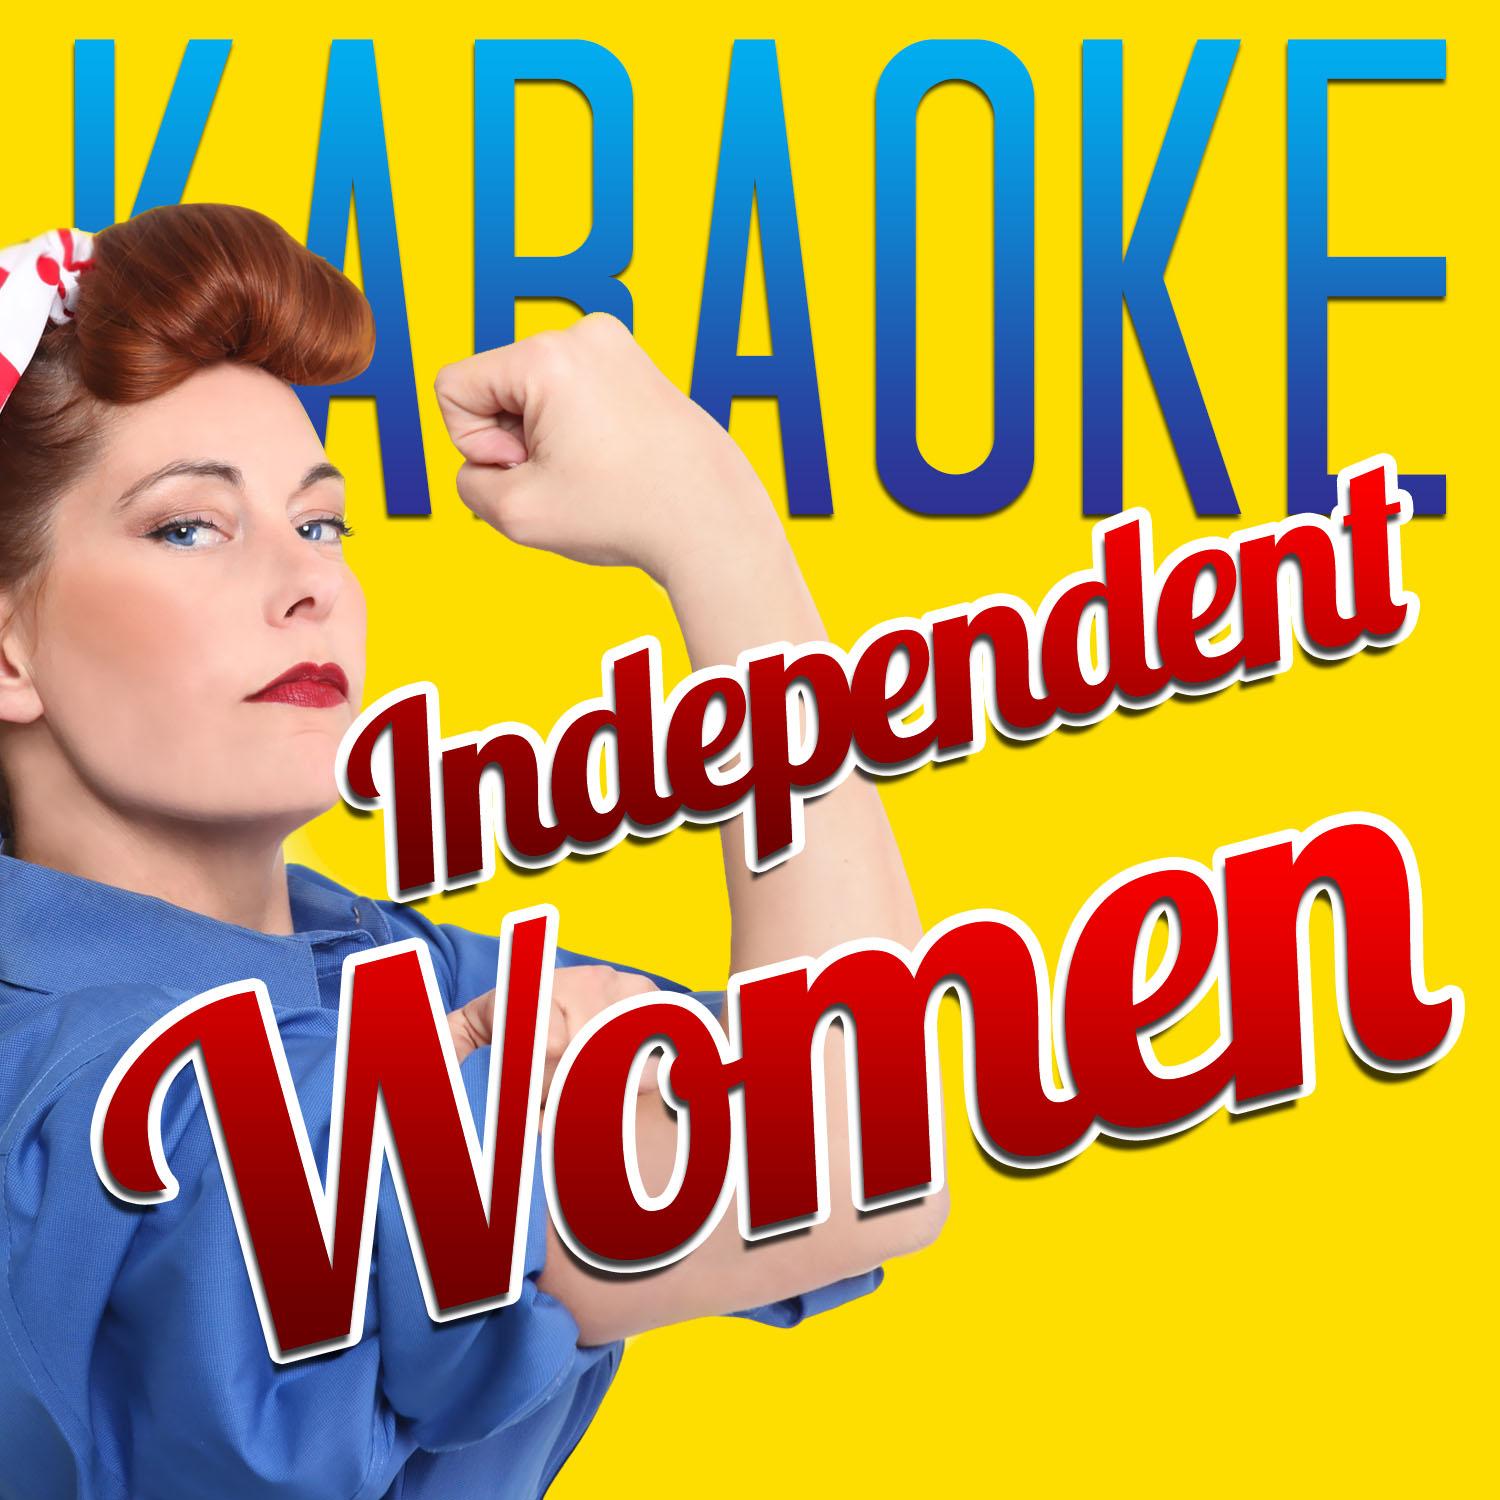 Karaoke - Independent Women